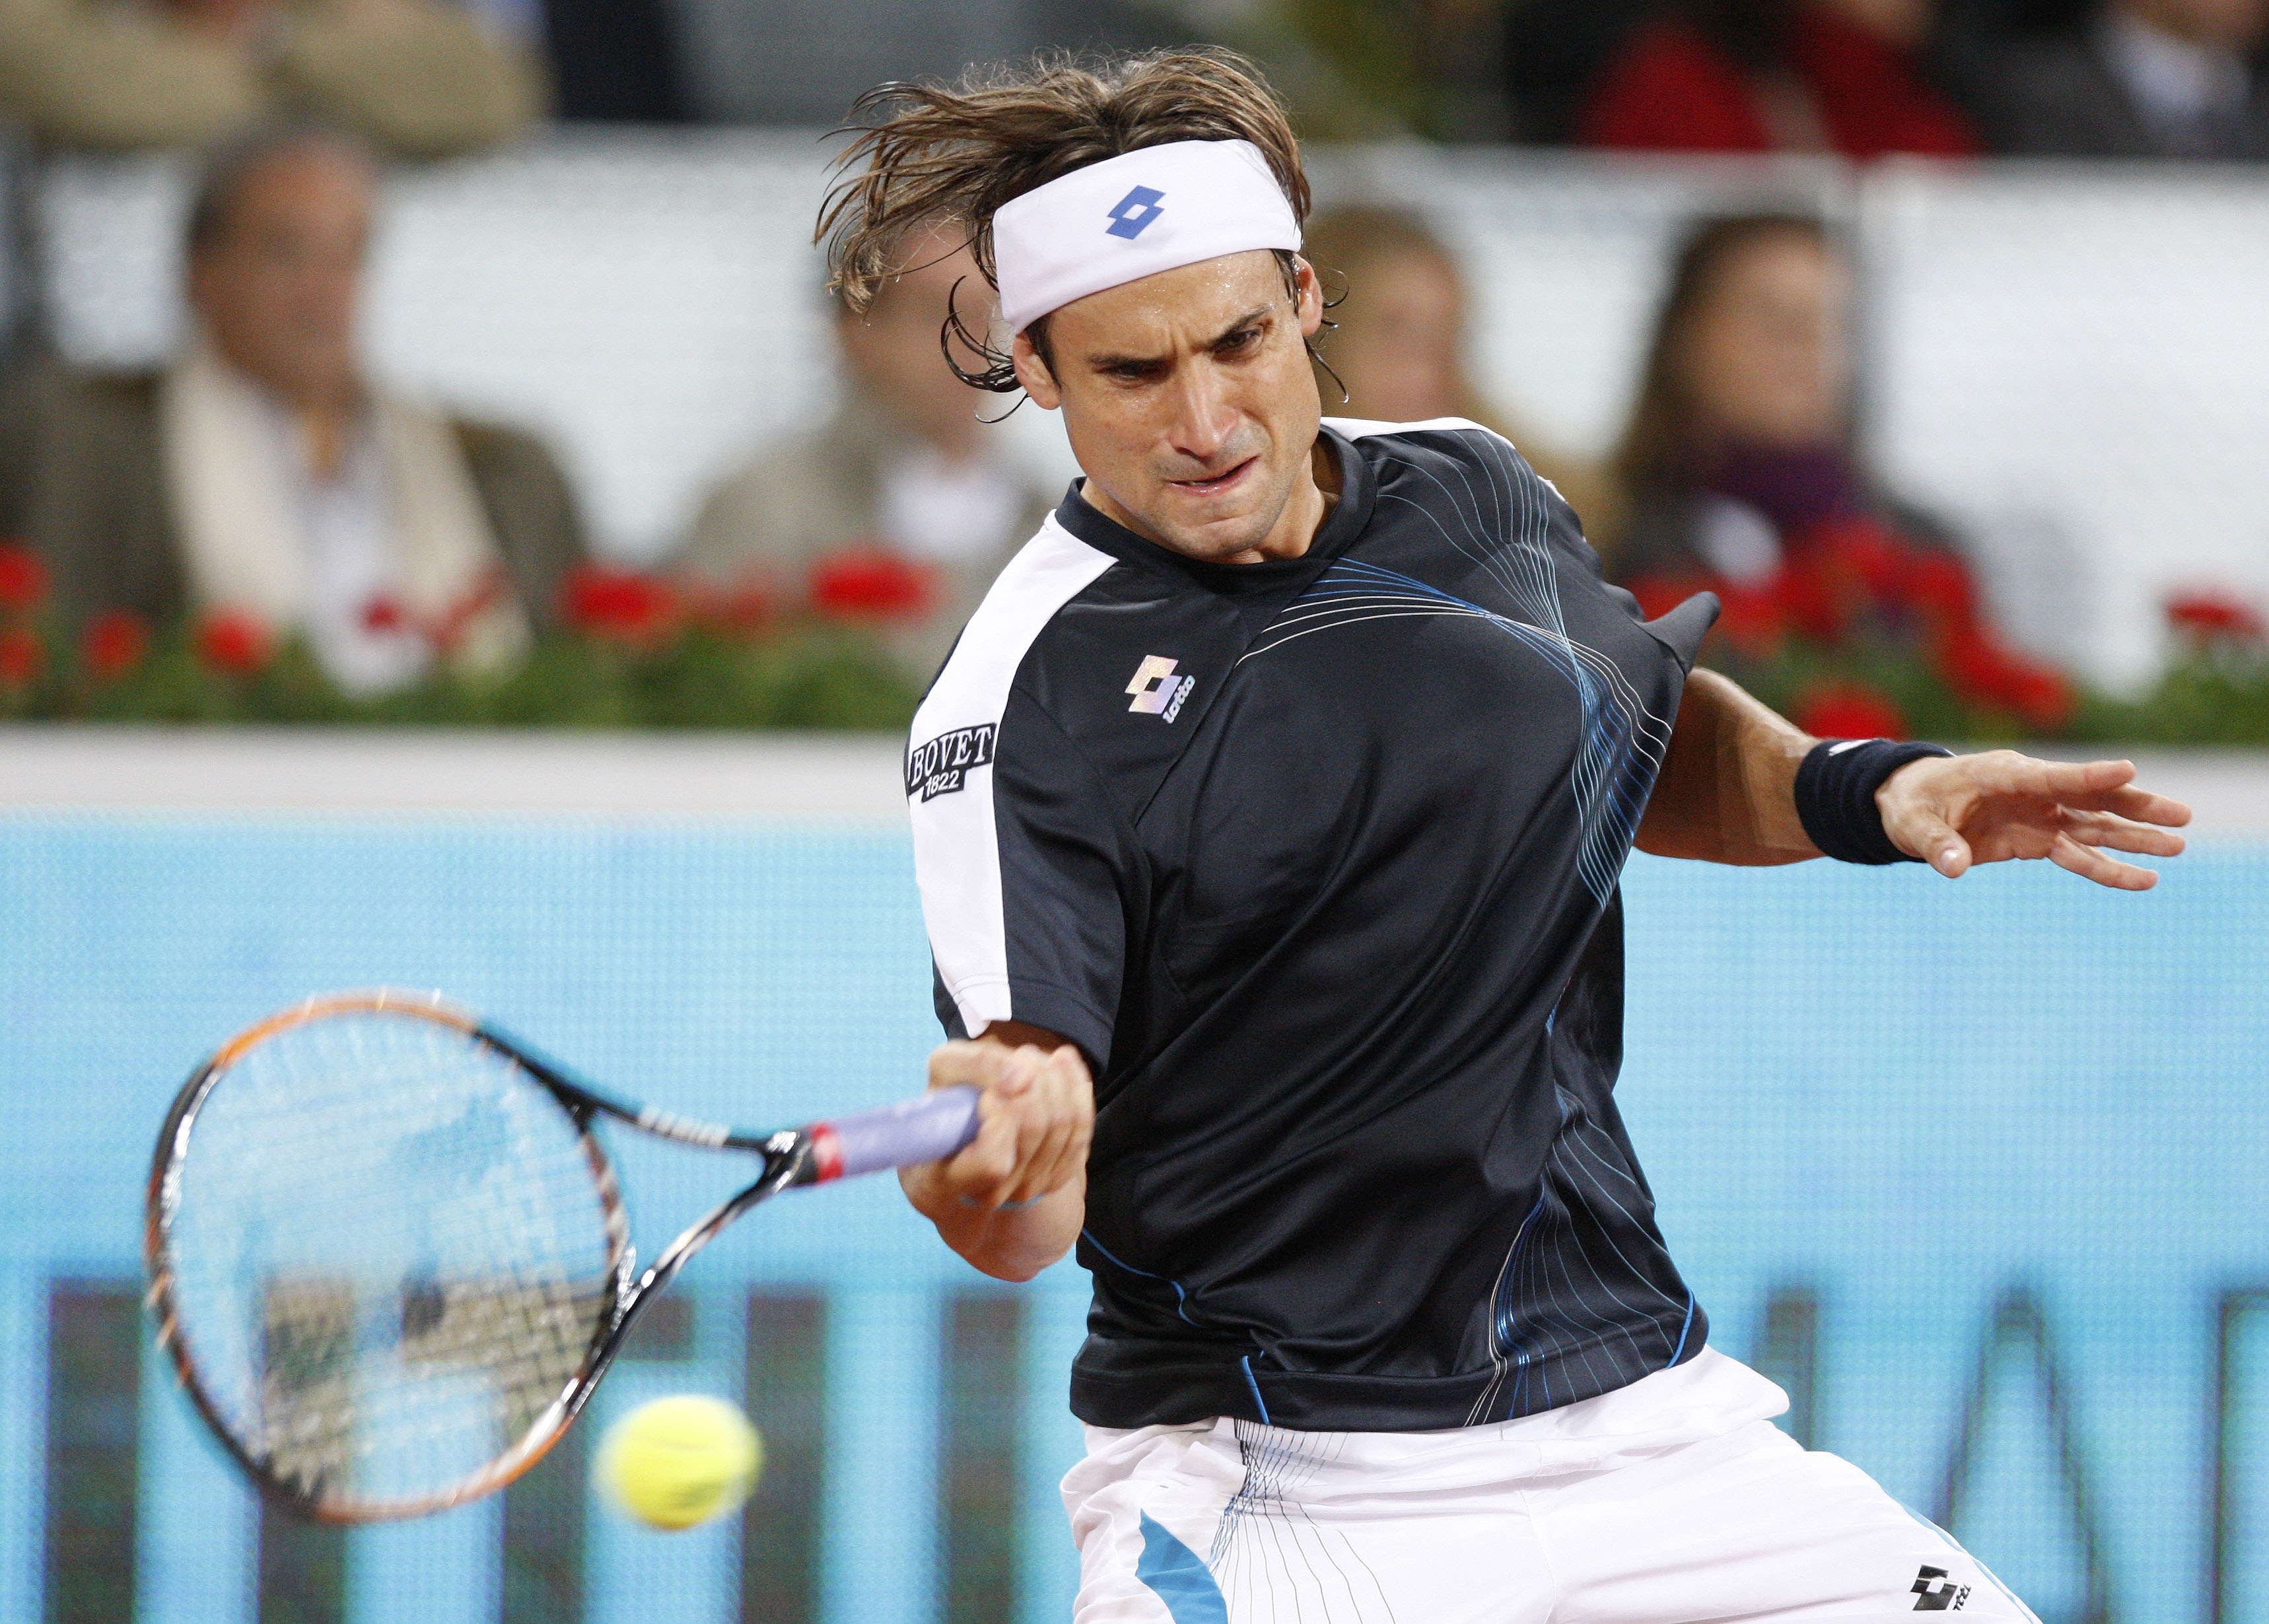 ATP, Roger Federer, Tennis, David Ferrer